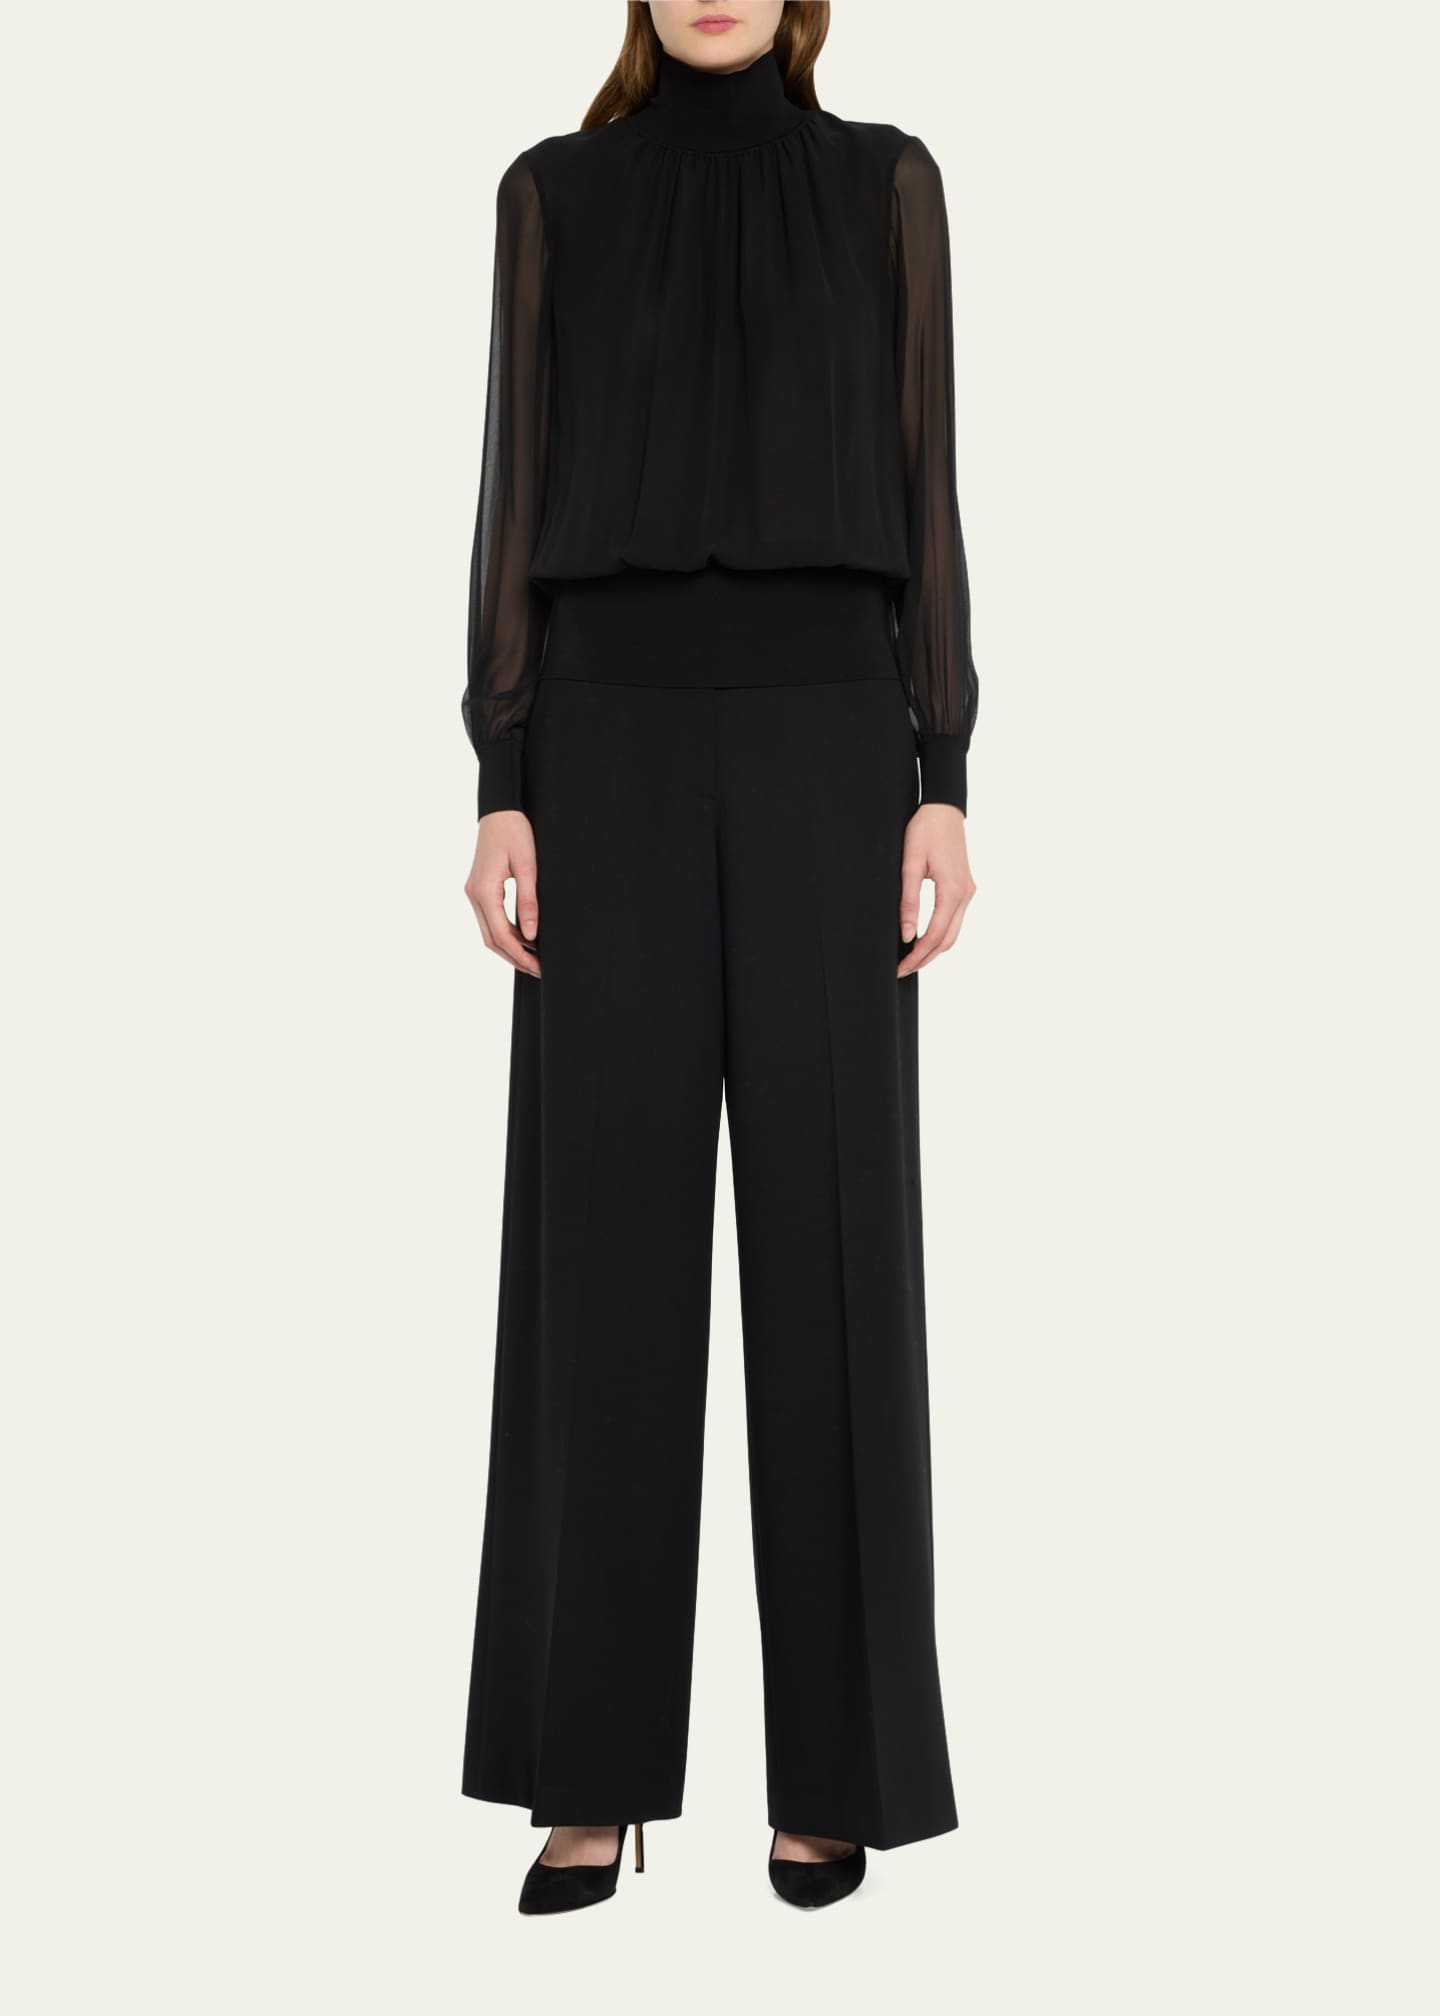 Woven Sleeves Taffeta Silk and Net Blouse in Black : UAC158